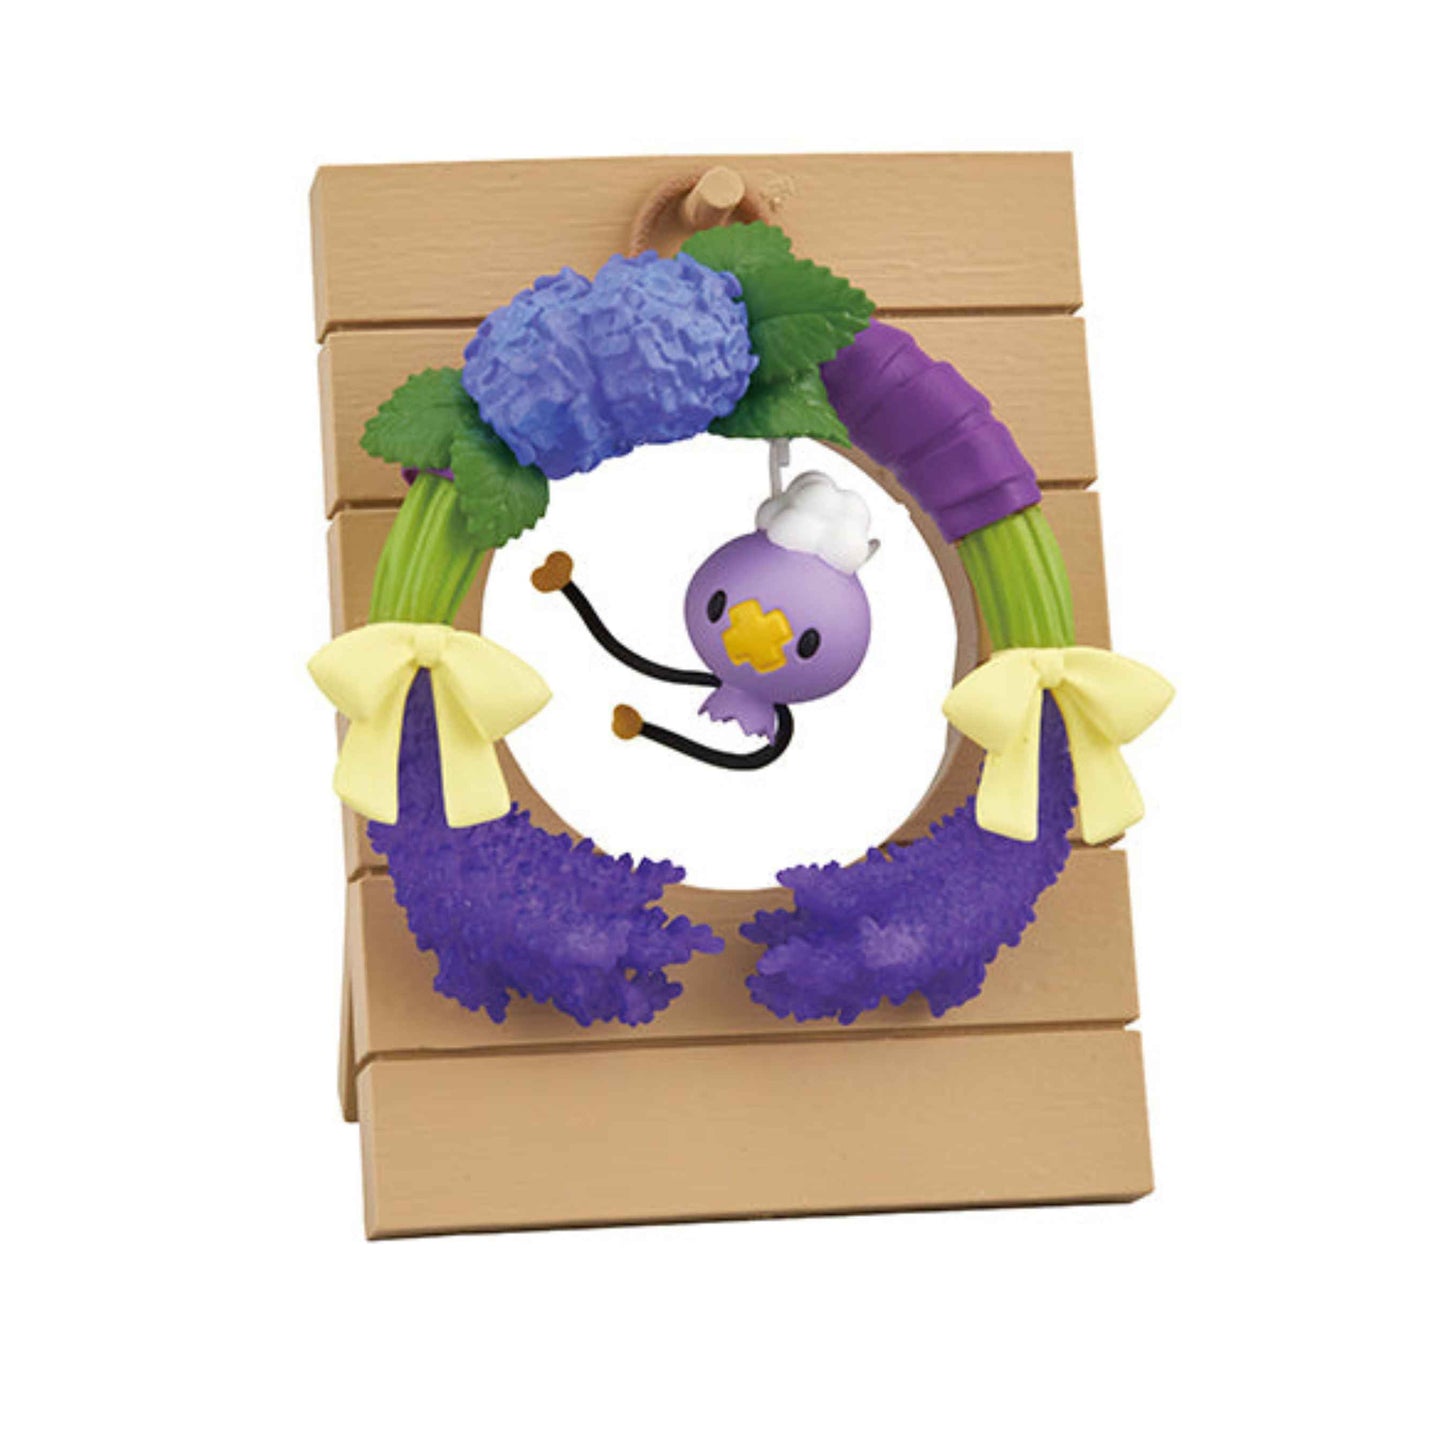 【New】re-Ment: Pokémon Happiness Wreath Series Blind Box Random Style